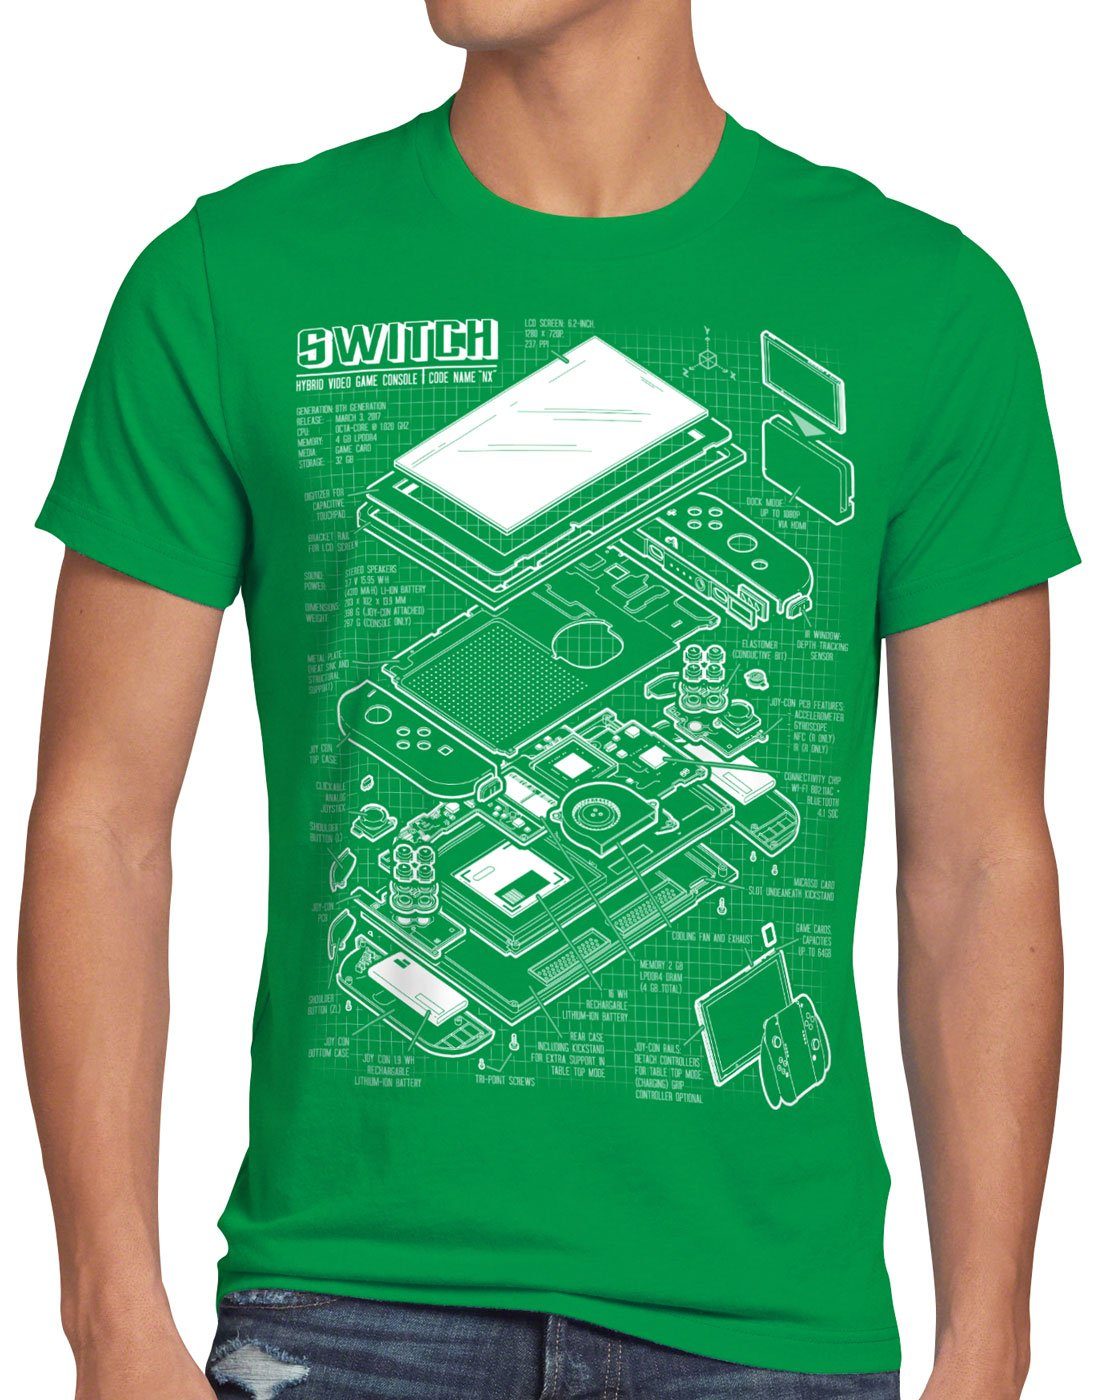 Print-Shirt pro Blaupause grün gamer T-Shirt joy-con Herren konsole style3 Switch